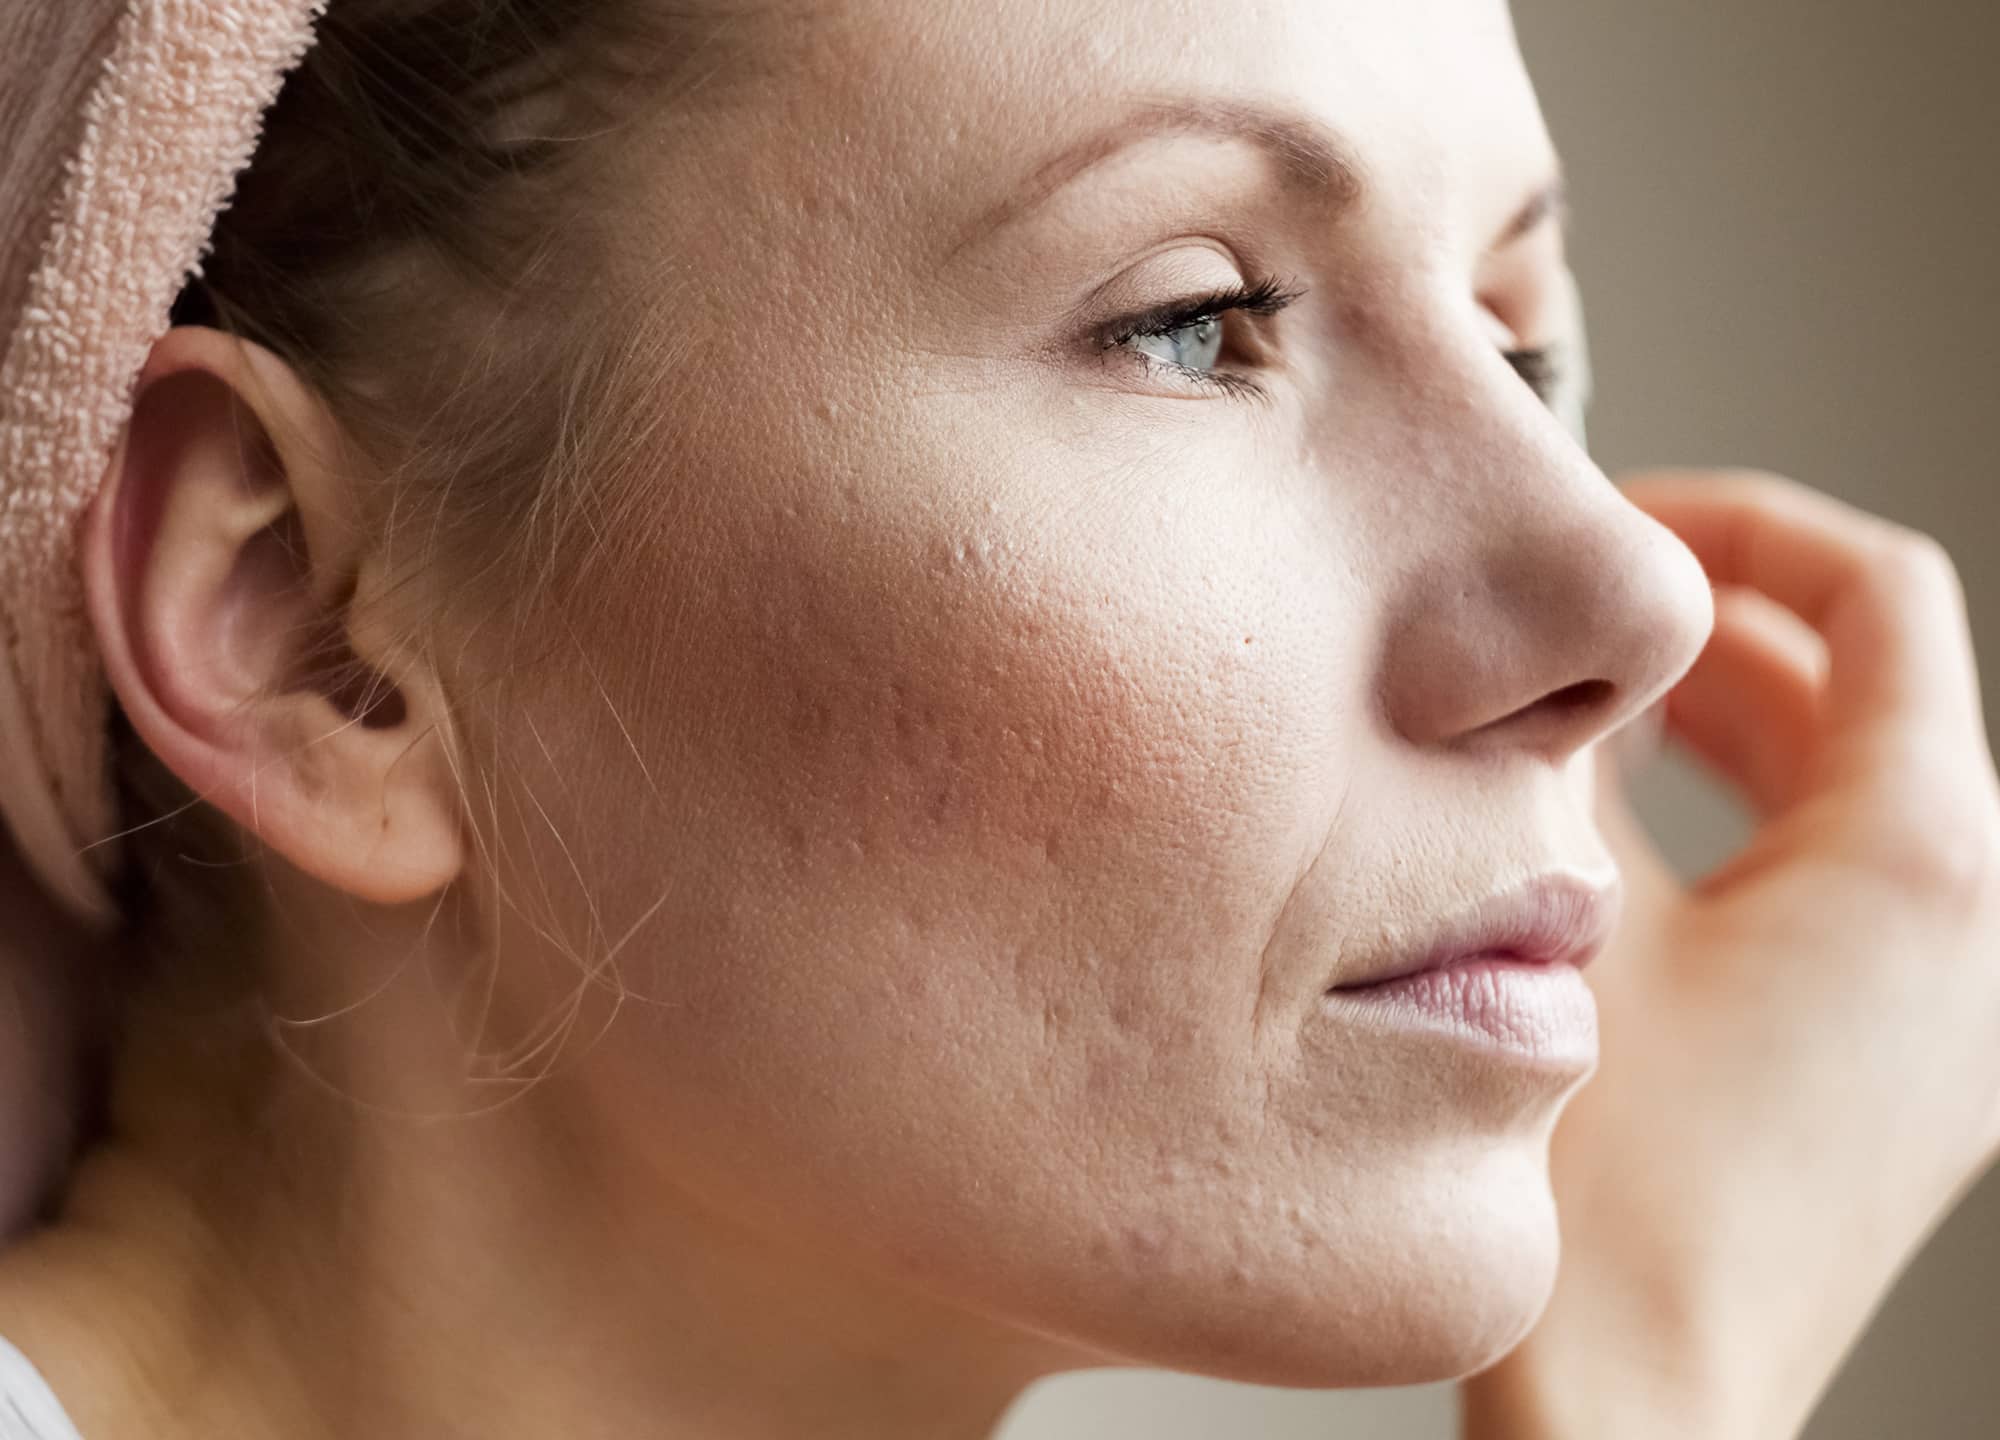 Stock image of Model after RS Sebacia acne treatment